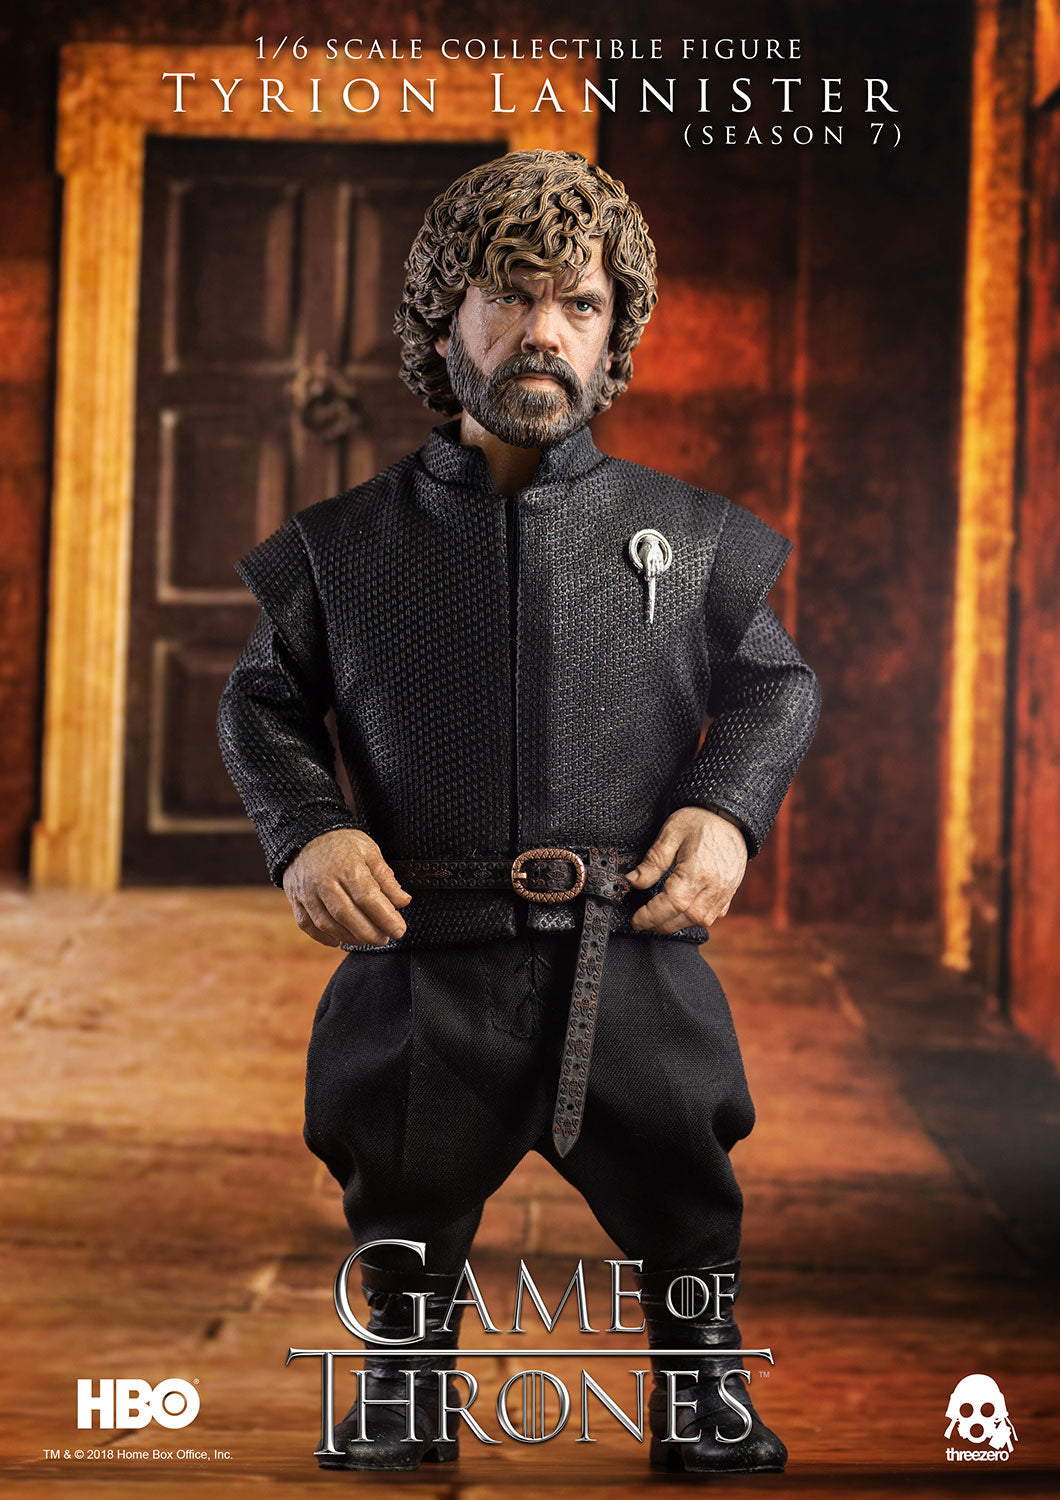 [IN STOCK in AU] Threezero HBO Game of Thrones GOT Tyrion Lannister Season 7 Deluxe Version 1/6